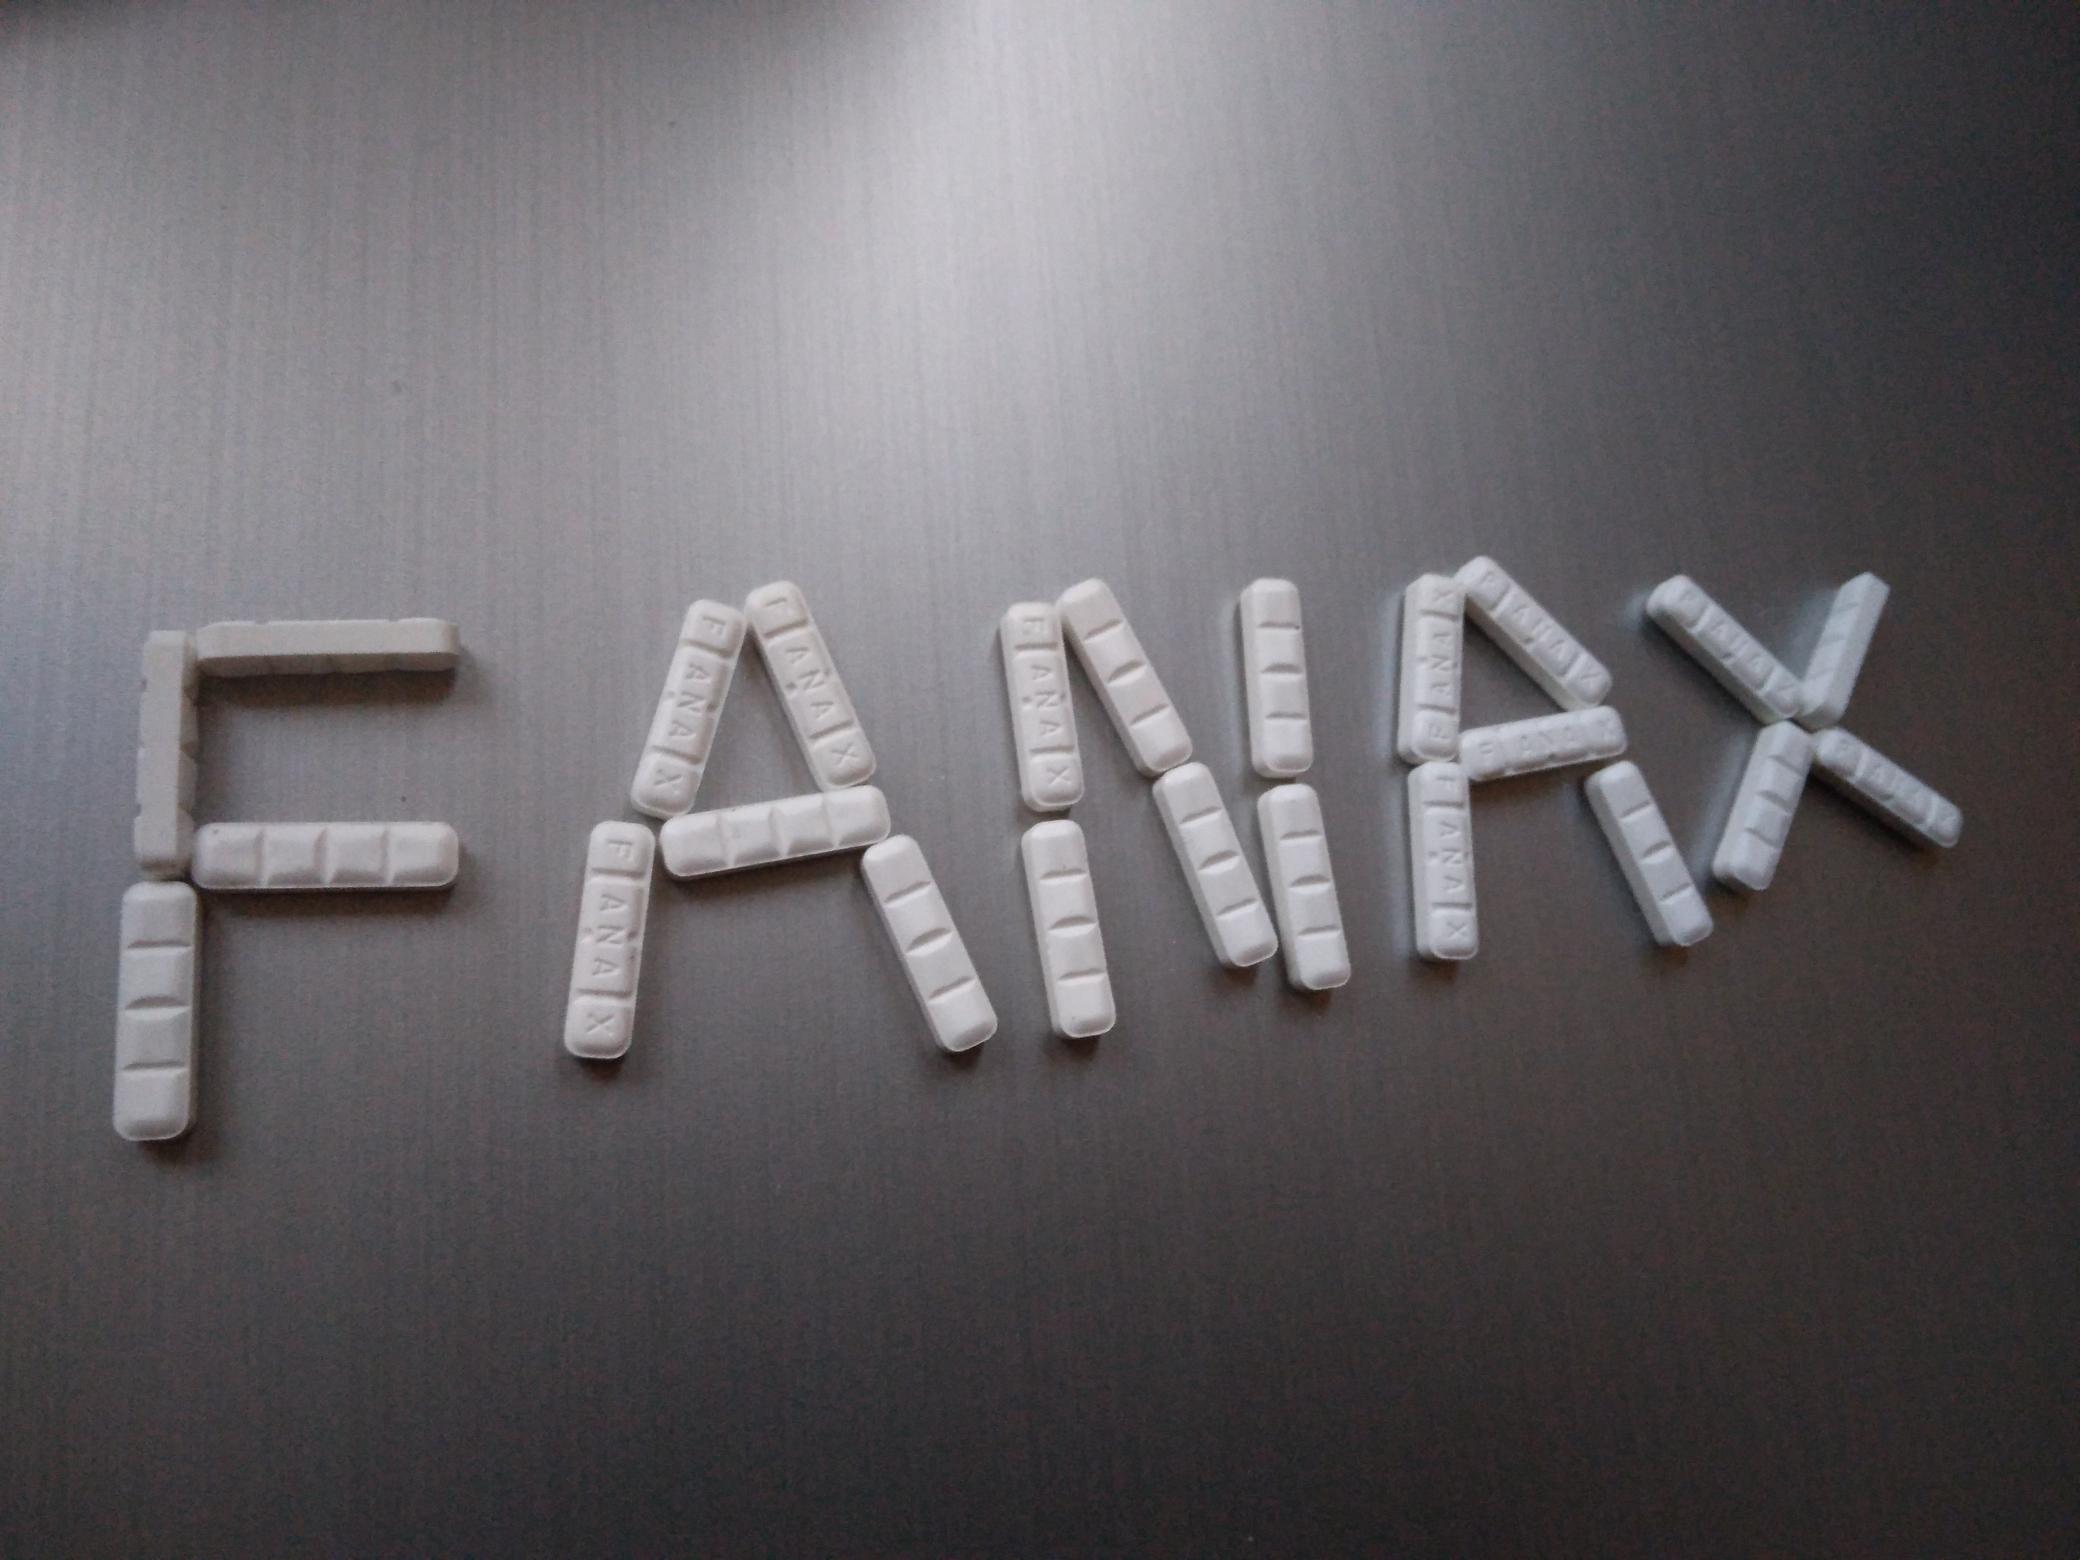 FANAX 0,5 mg pellets